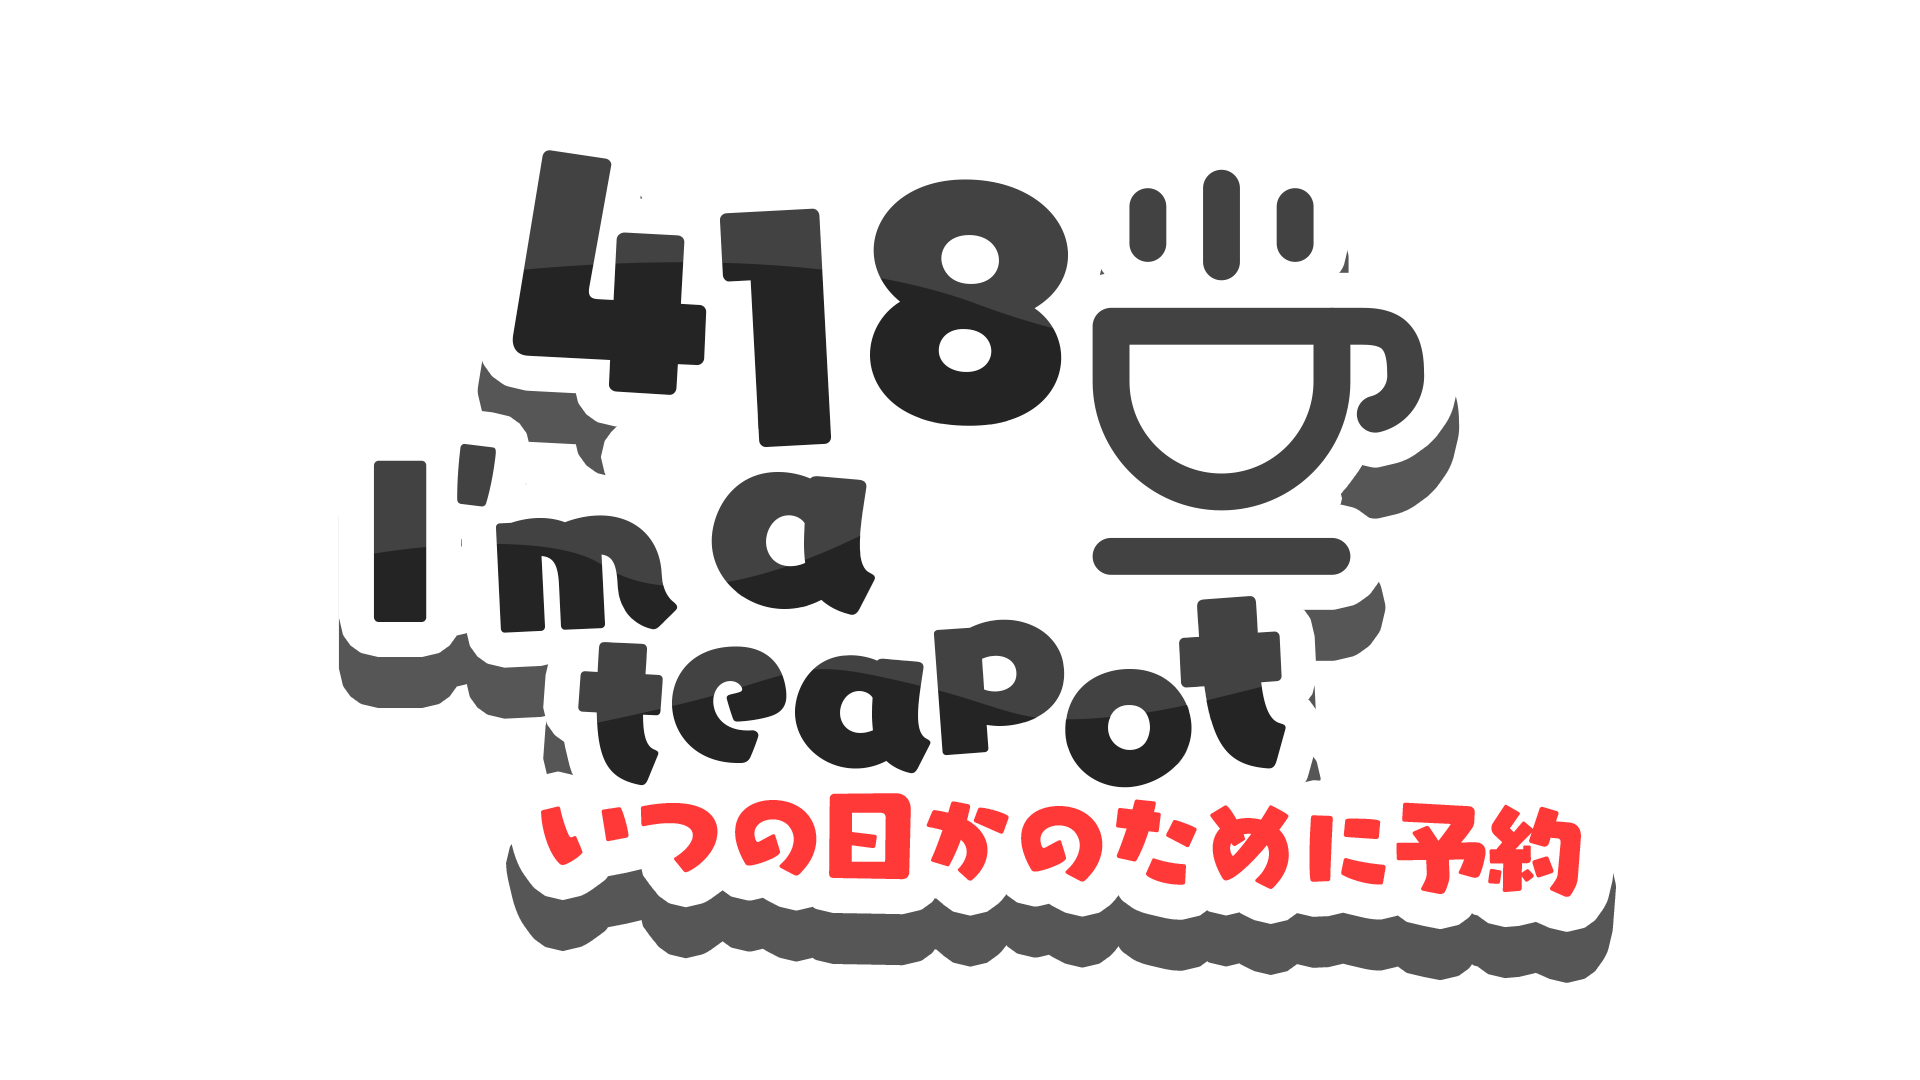 I'm a Teapot